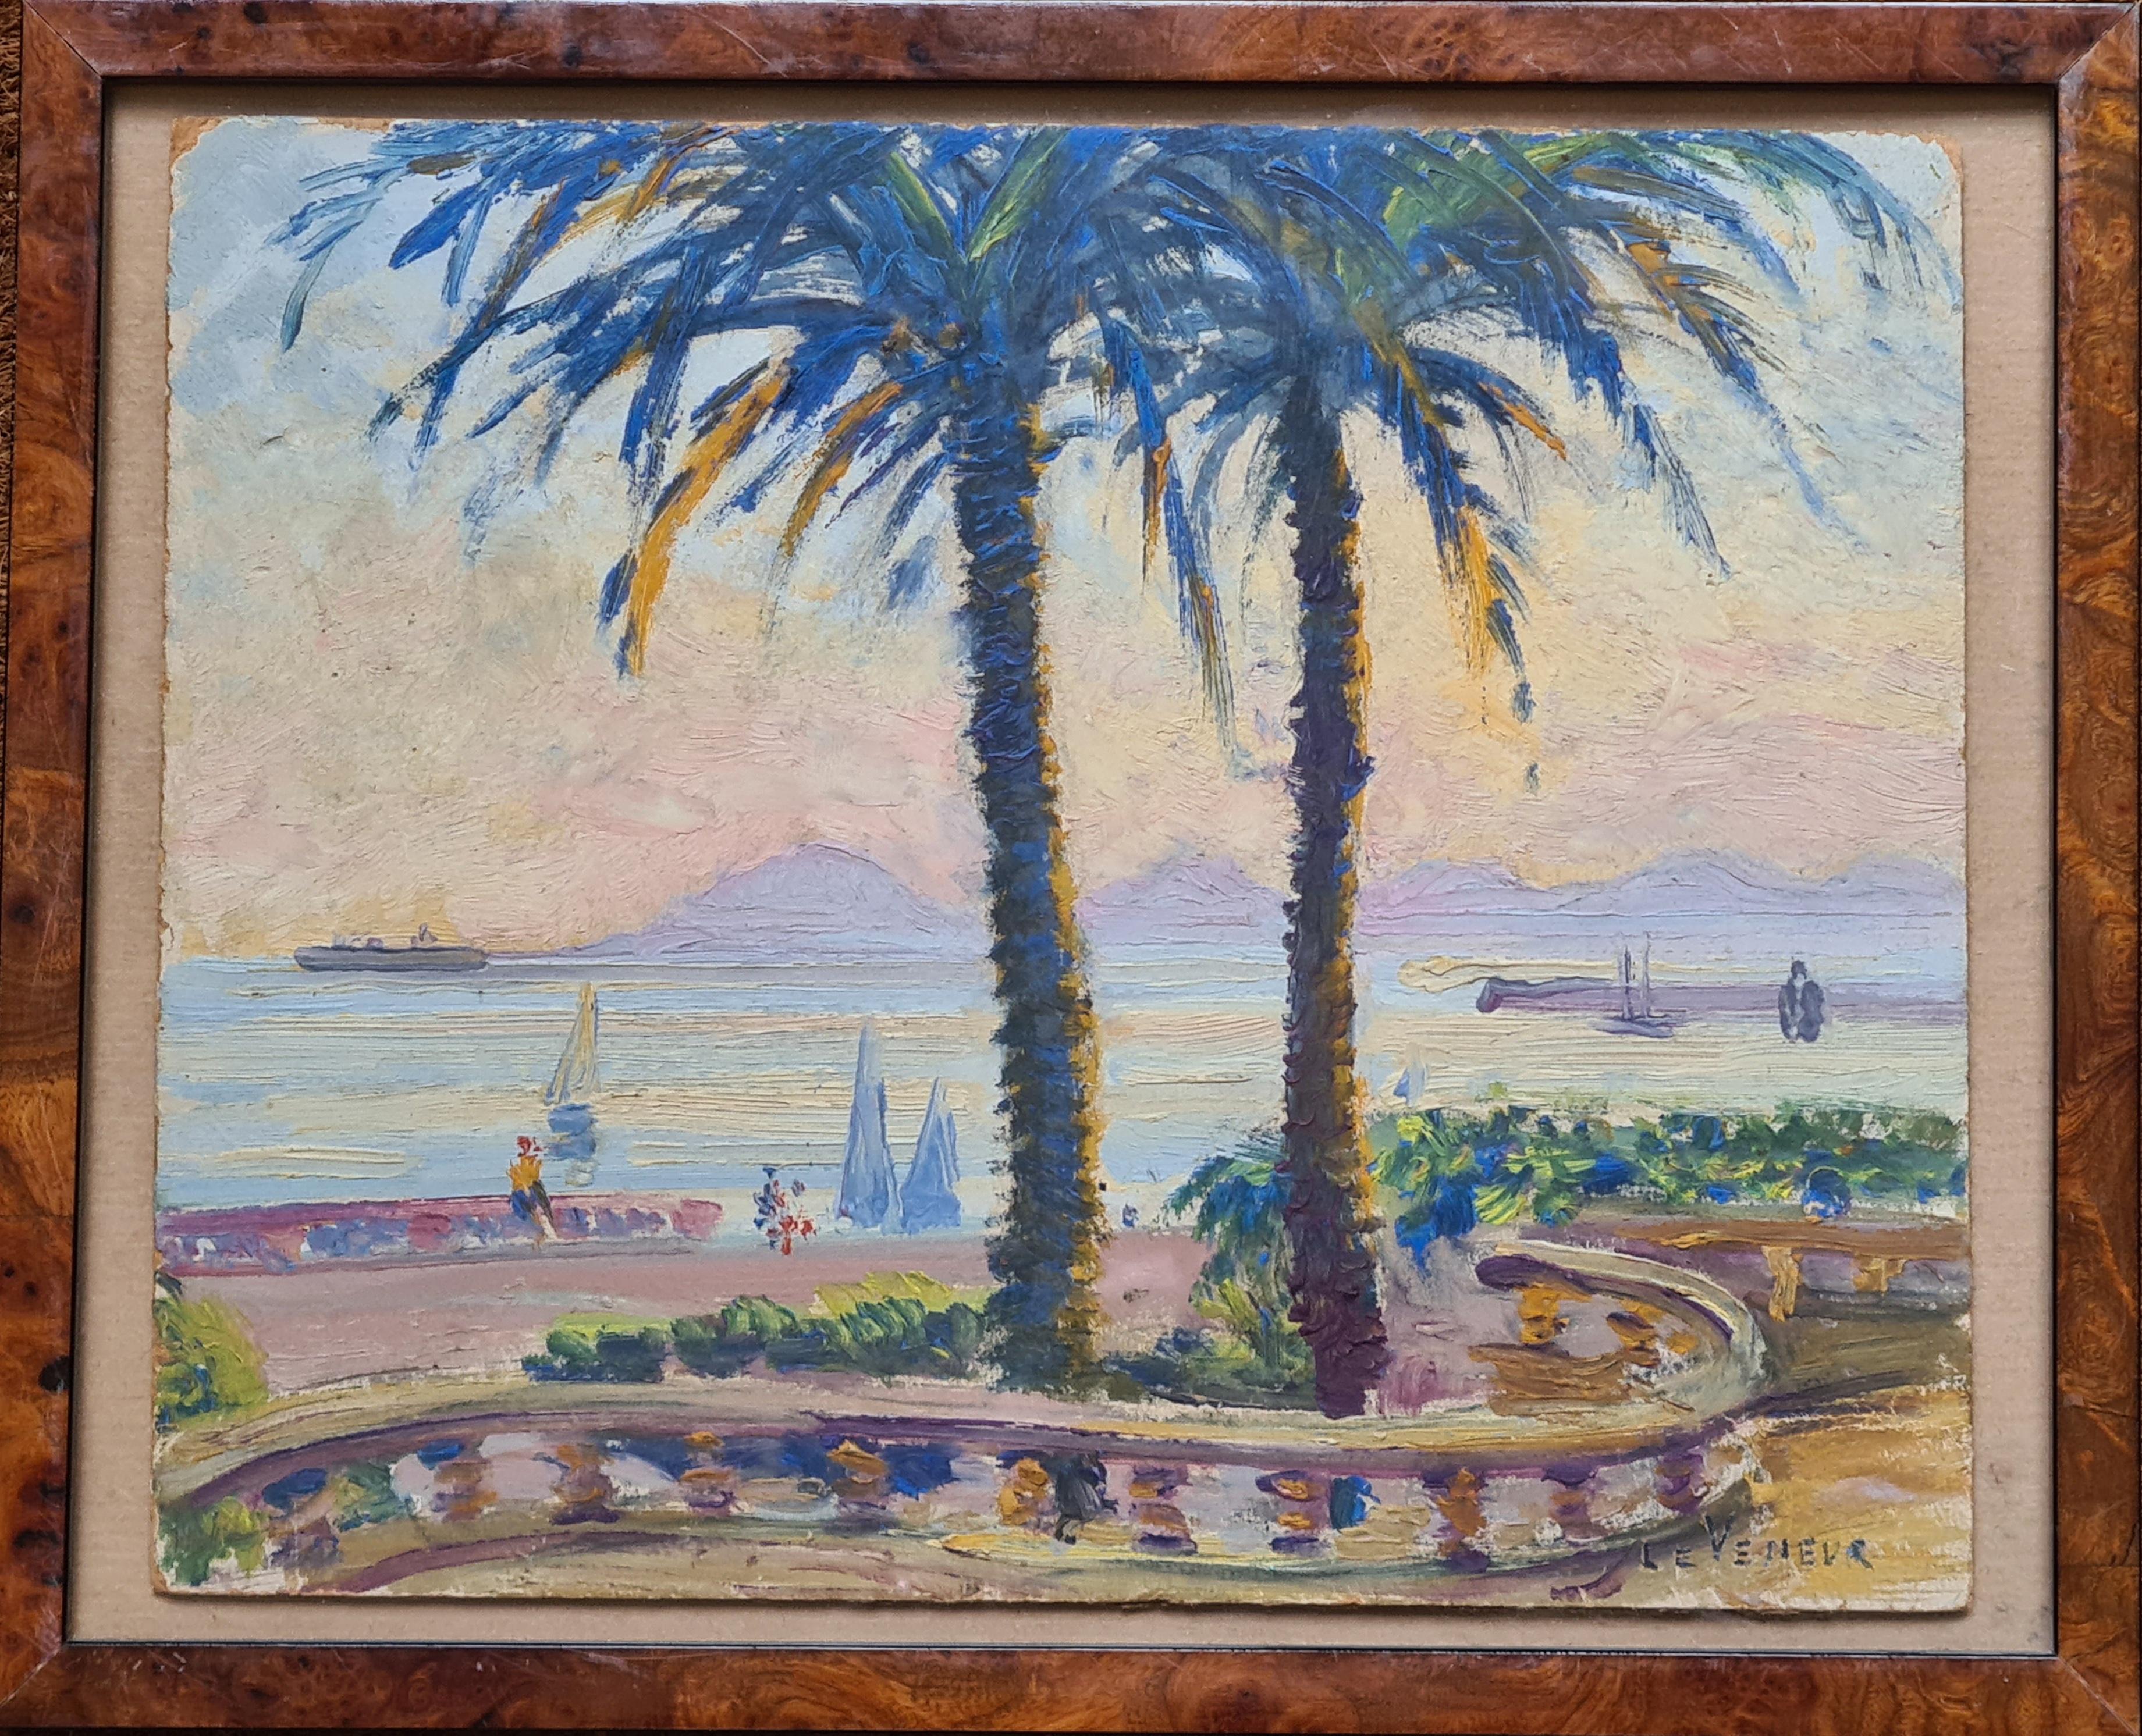 Robert Auguste Jaeger aka Le Veneur Figurative Painting - La Croisette, Cannes, French Oil on Board Seascape